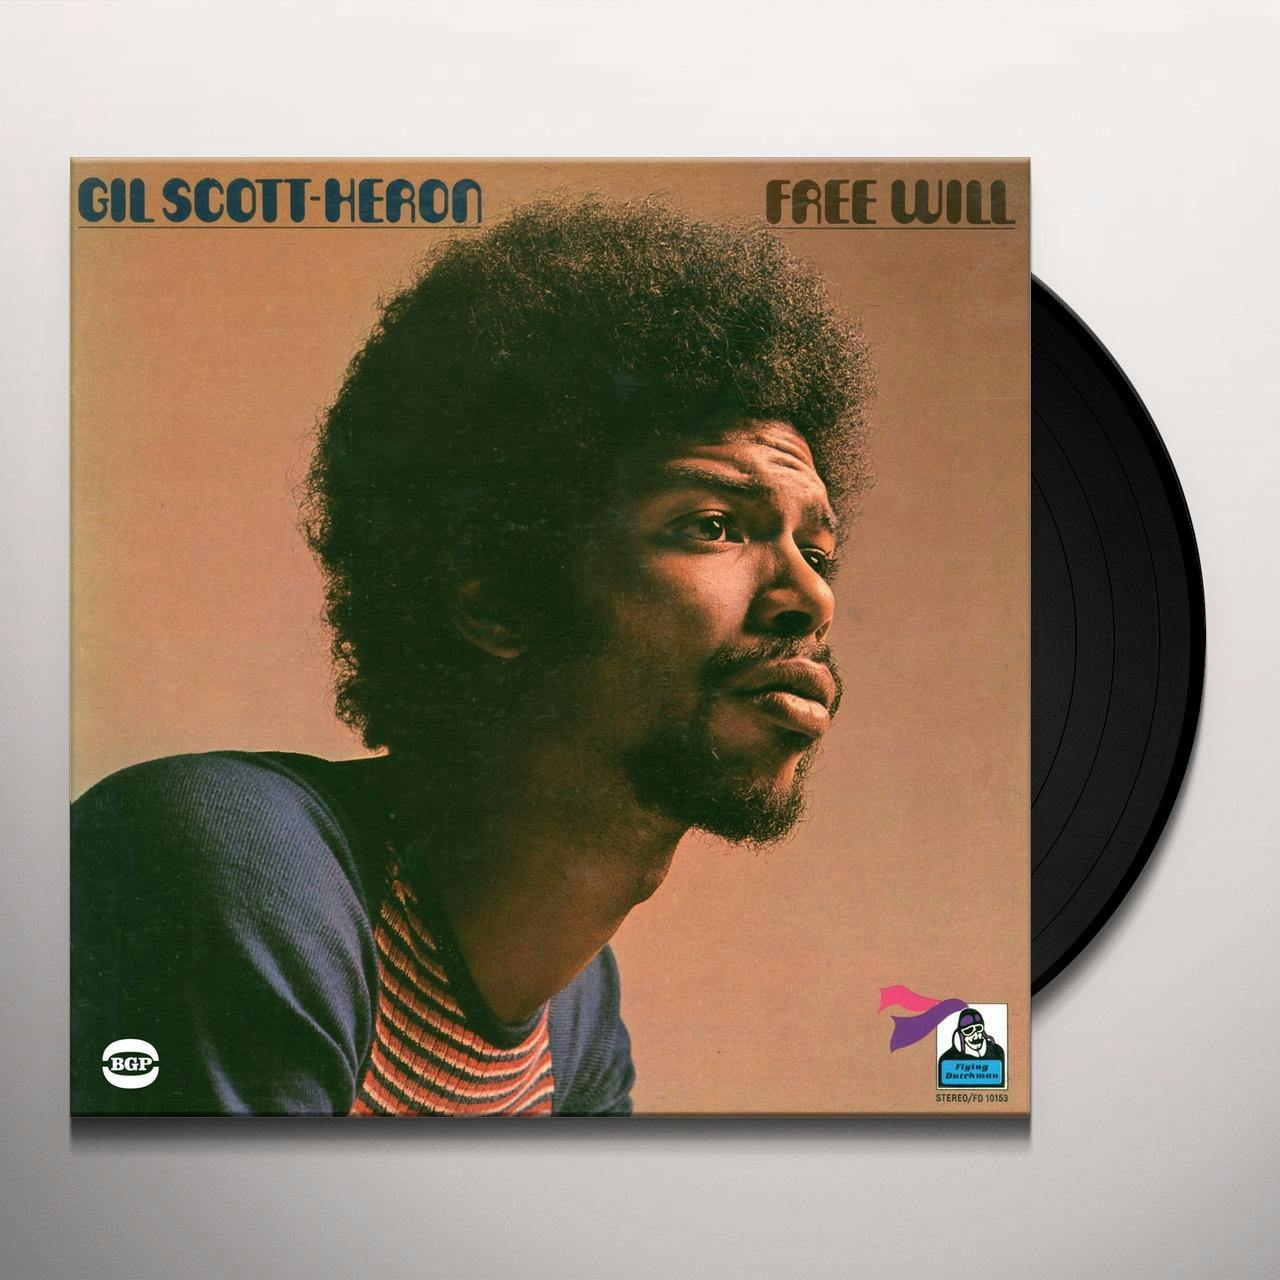 Gil Scott-Heron Free Will Vinyl Record